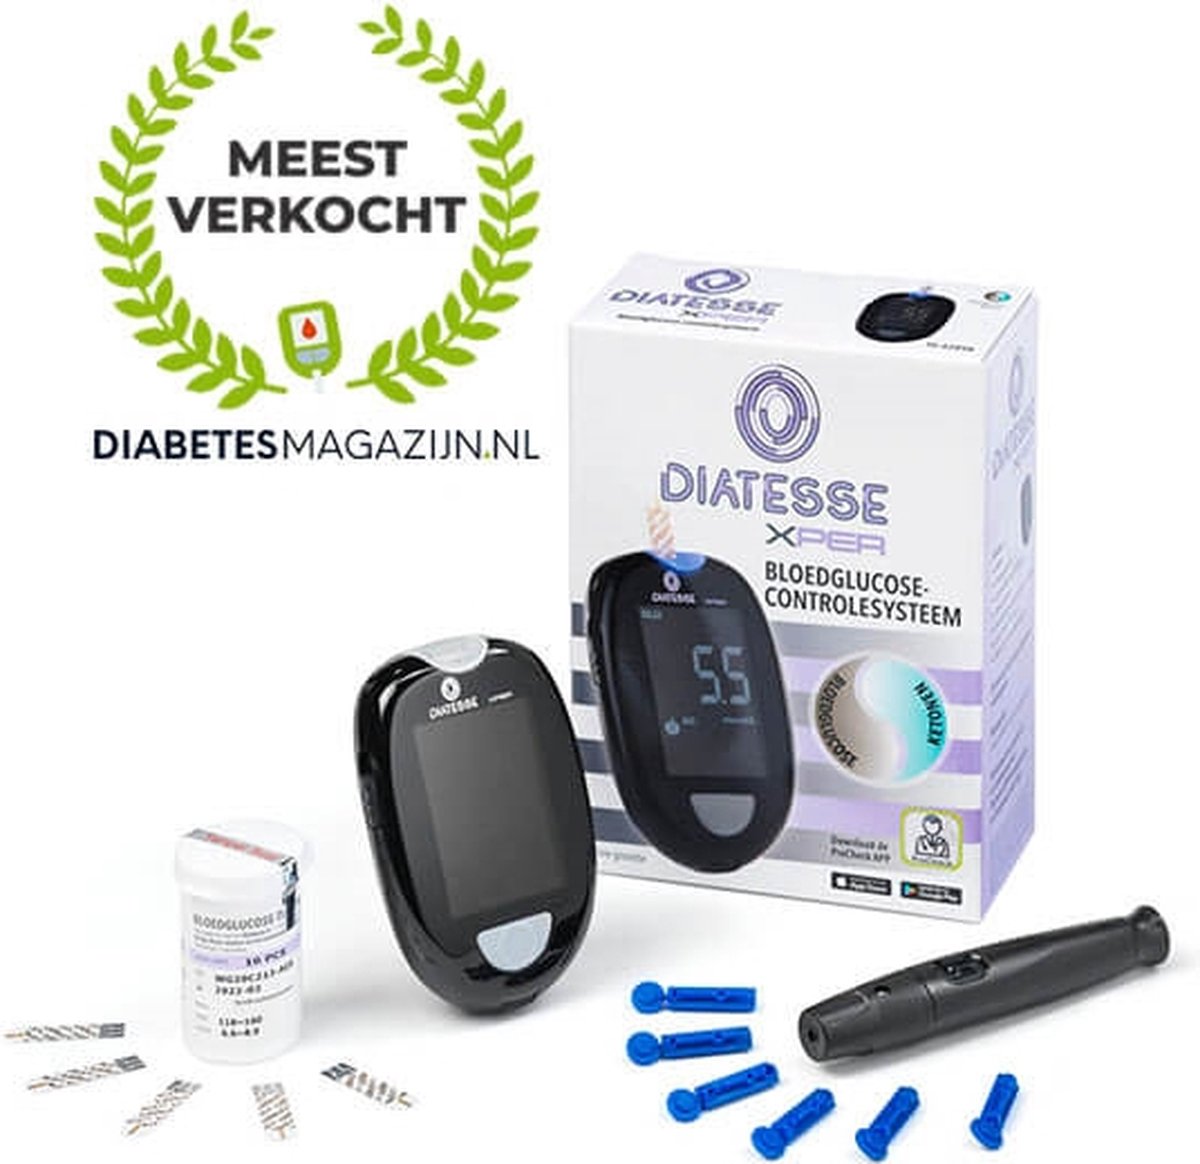 Diatesse XPER glucose-ketonen startpakket review